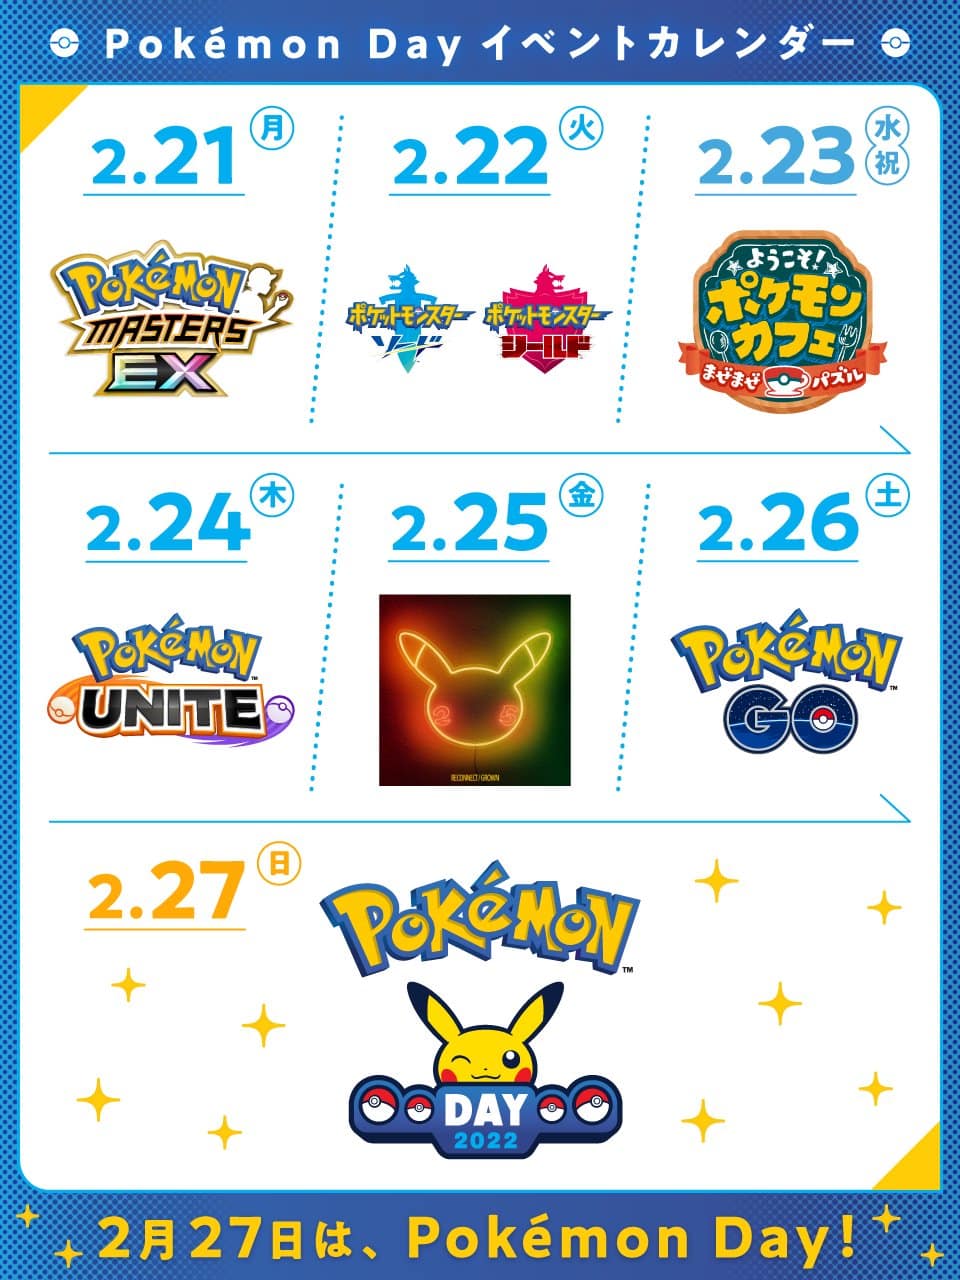 Pokemon Day 2022 schedule screenshot.